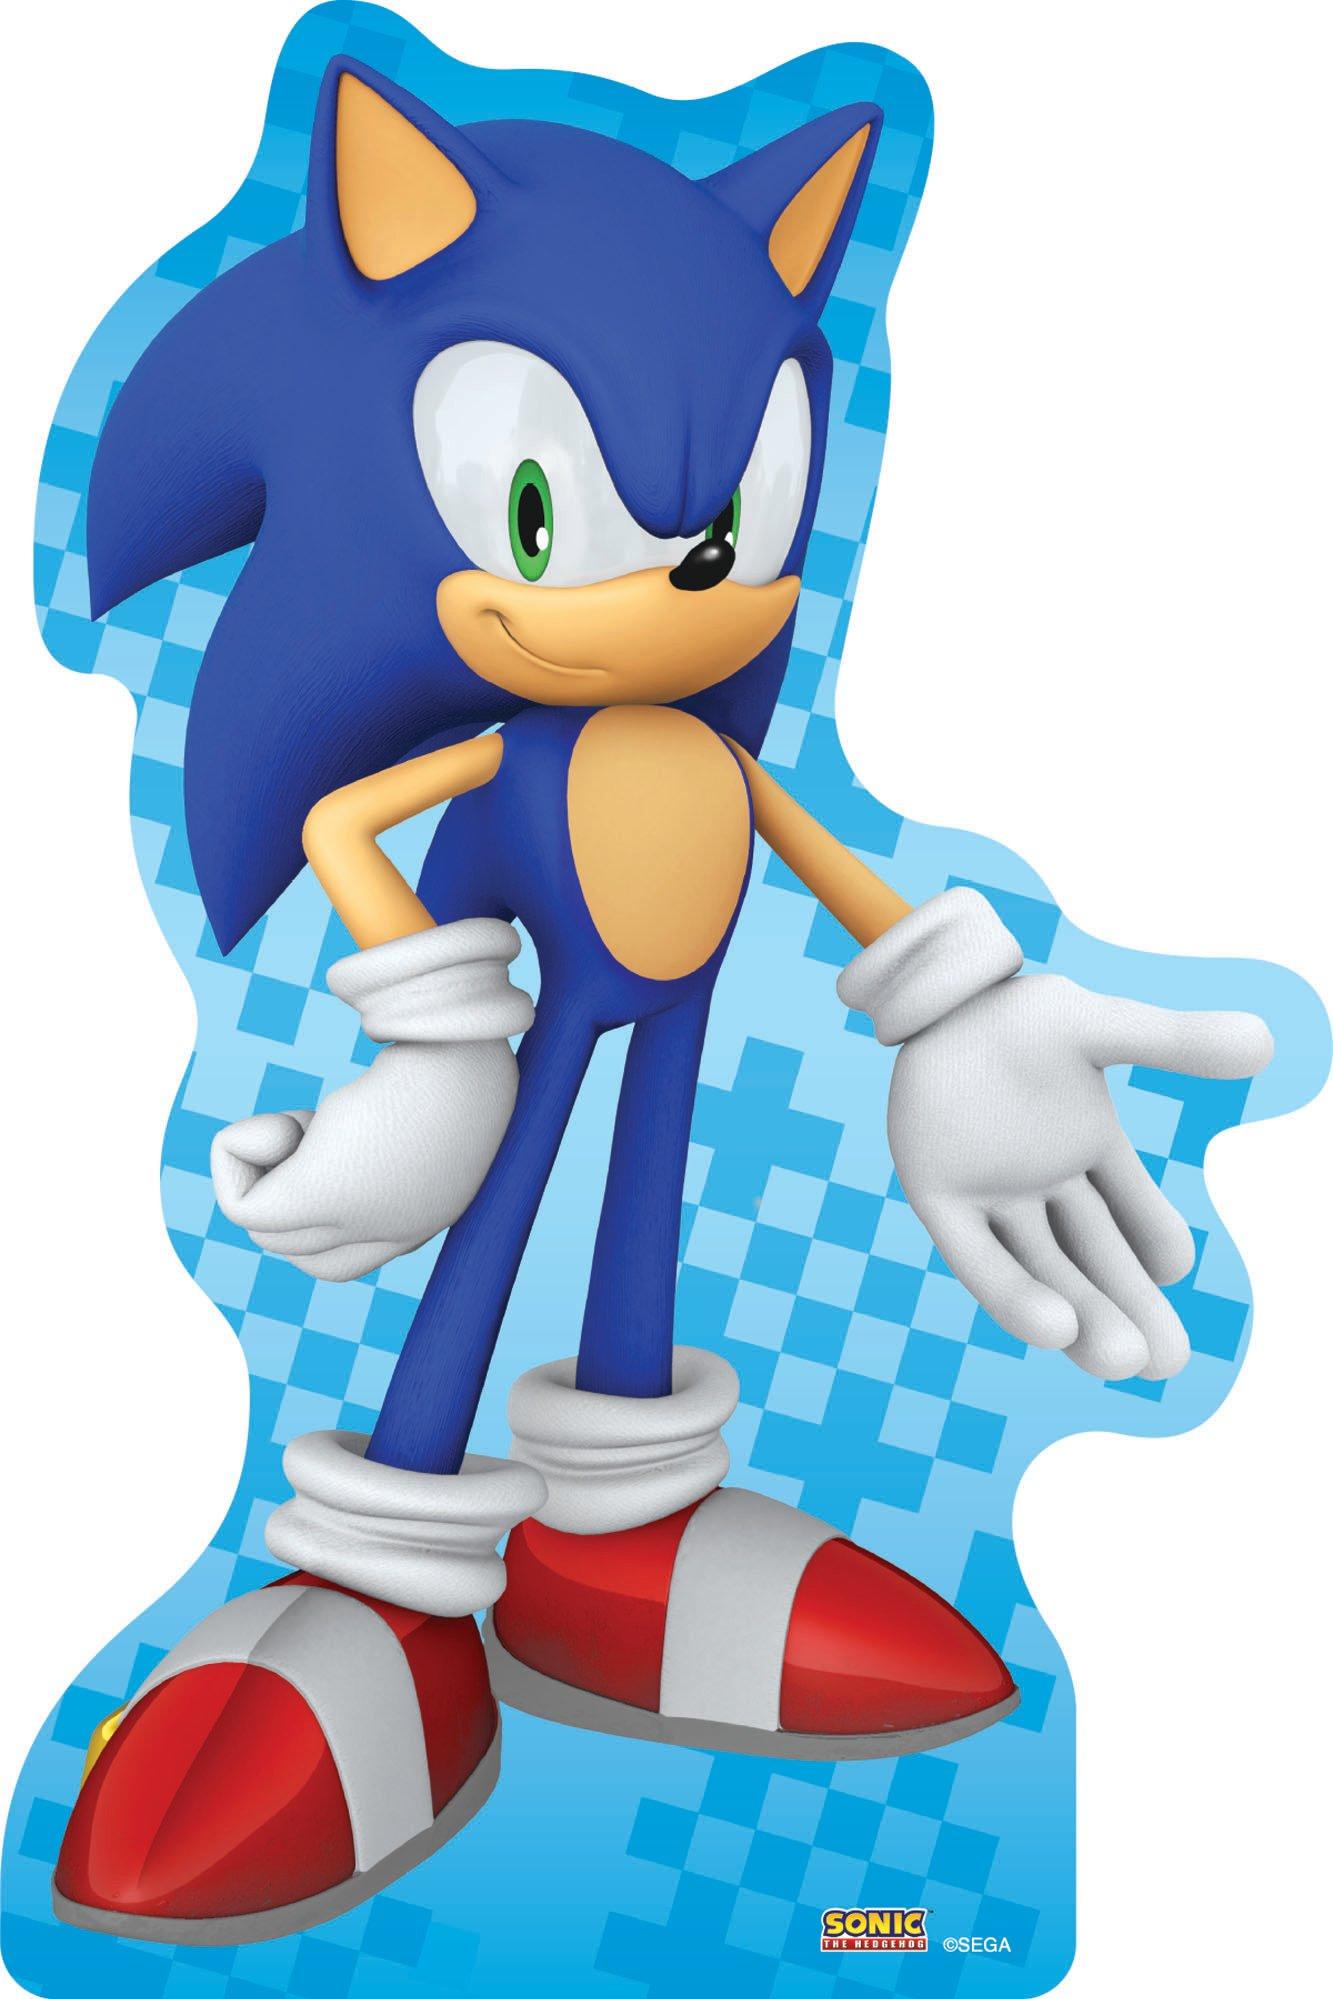 Sonic the Hedgehog Pose 2 Life-Size Cardboard Cutout